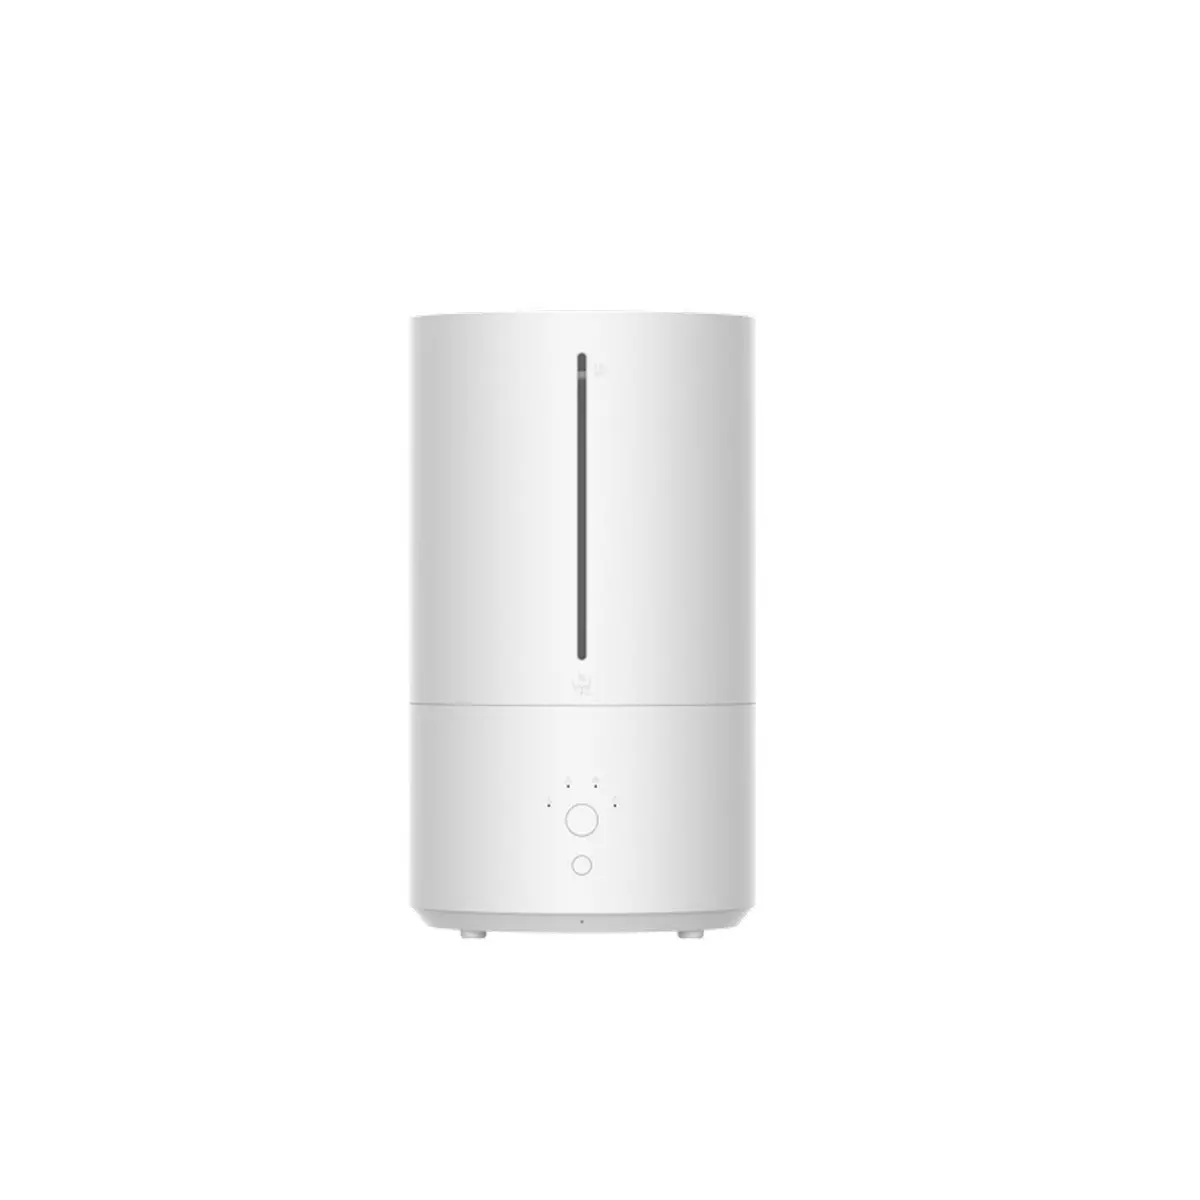 XIAOMI ovlaživač zraka Mi Smart Humidifier 2 image